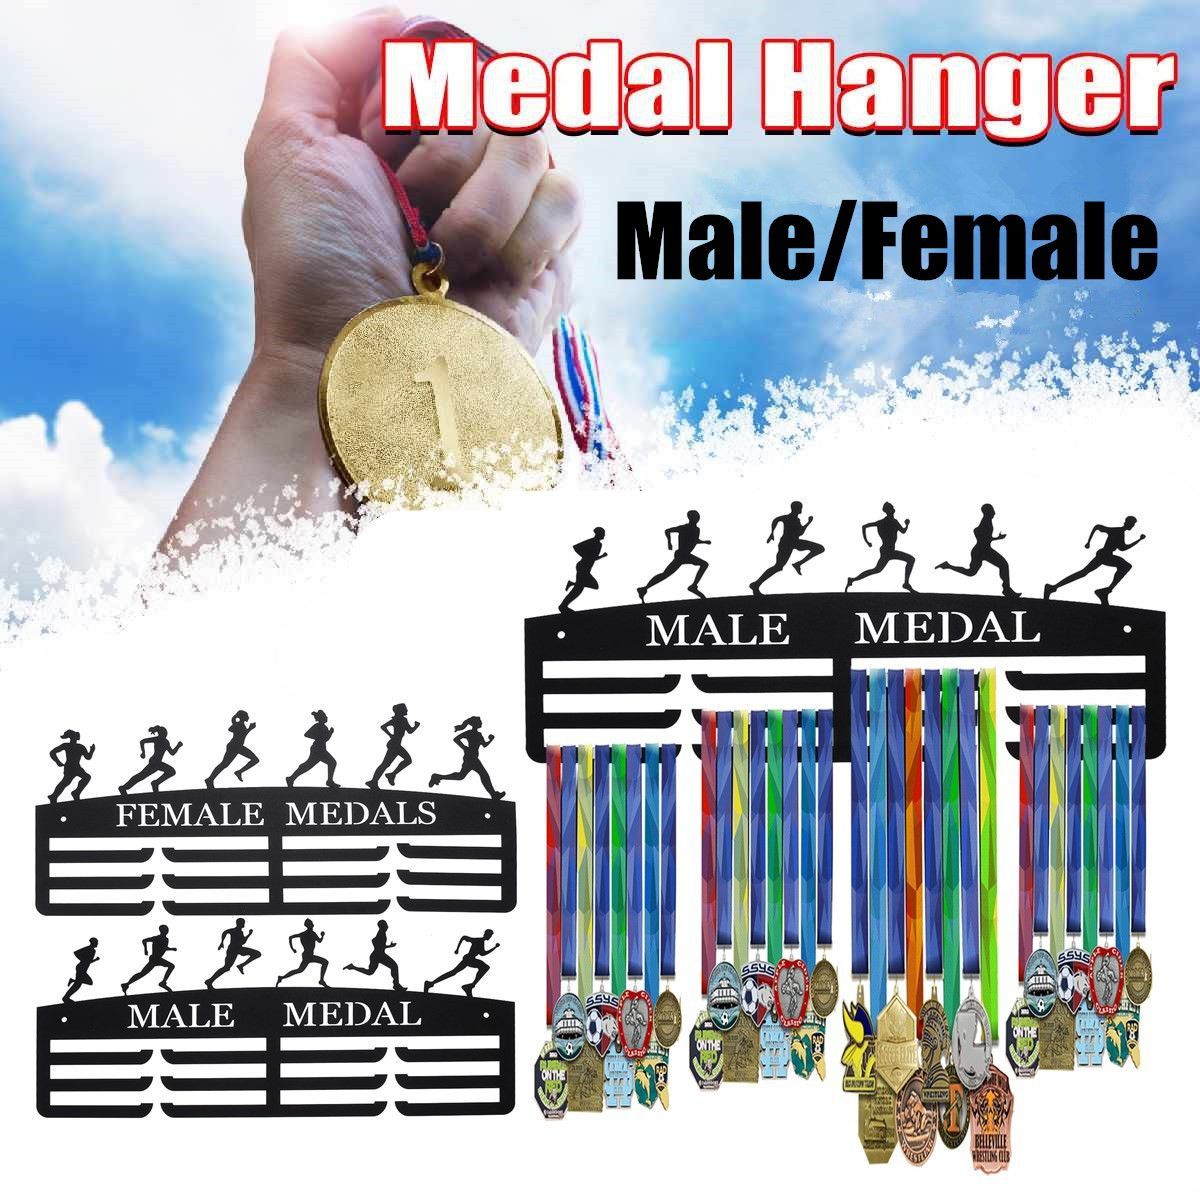 MaleFemale-Running-Medal-Hanger-Holder-Display-Sport-Medal-Rack-Decorations-1608554